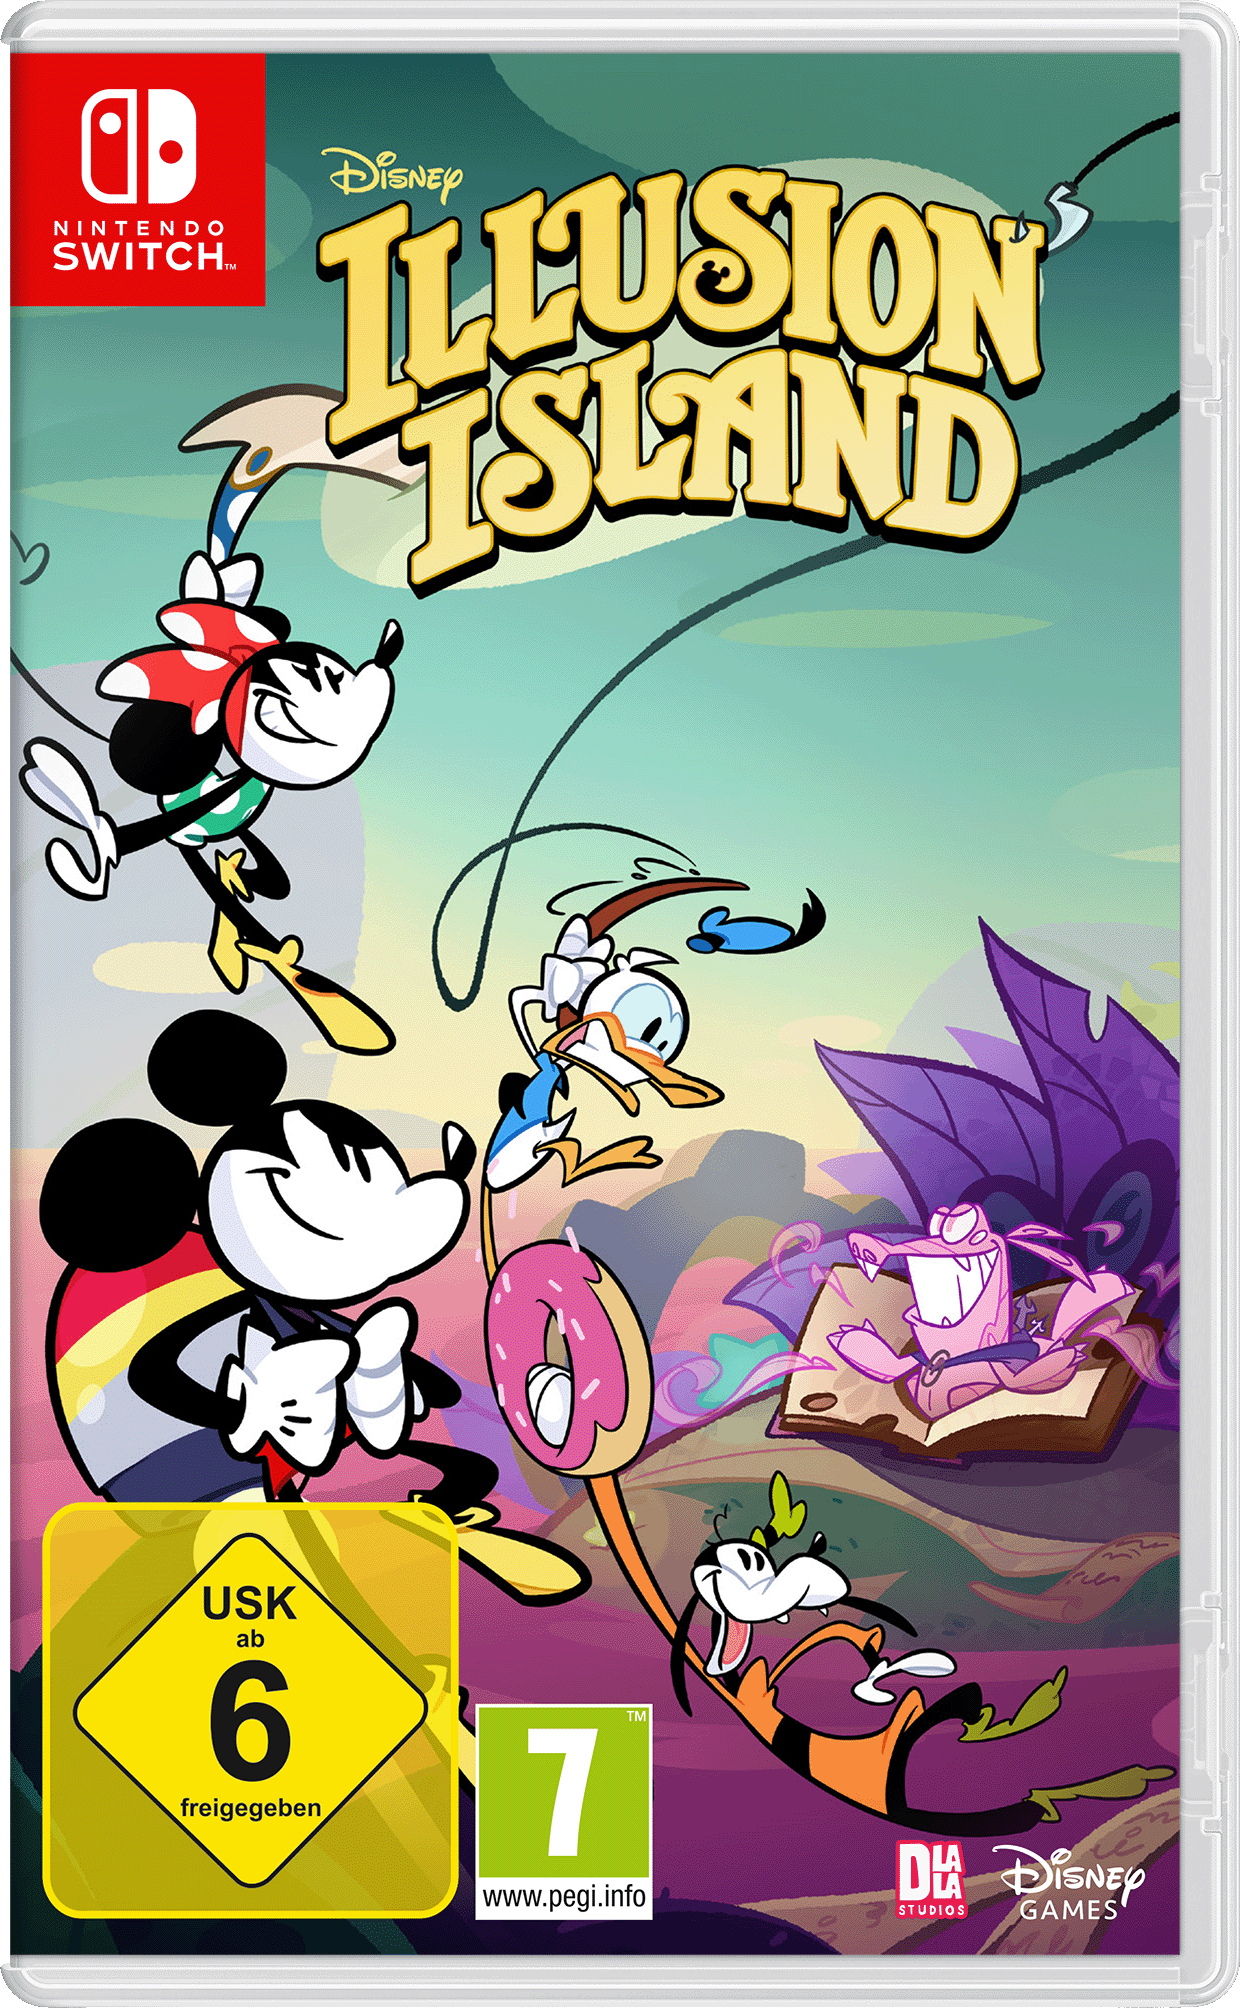 Island Disney [Nintendo Switch] - Illusions